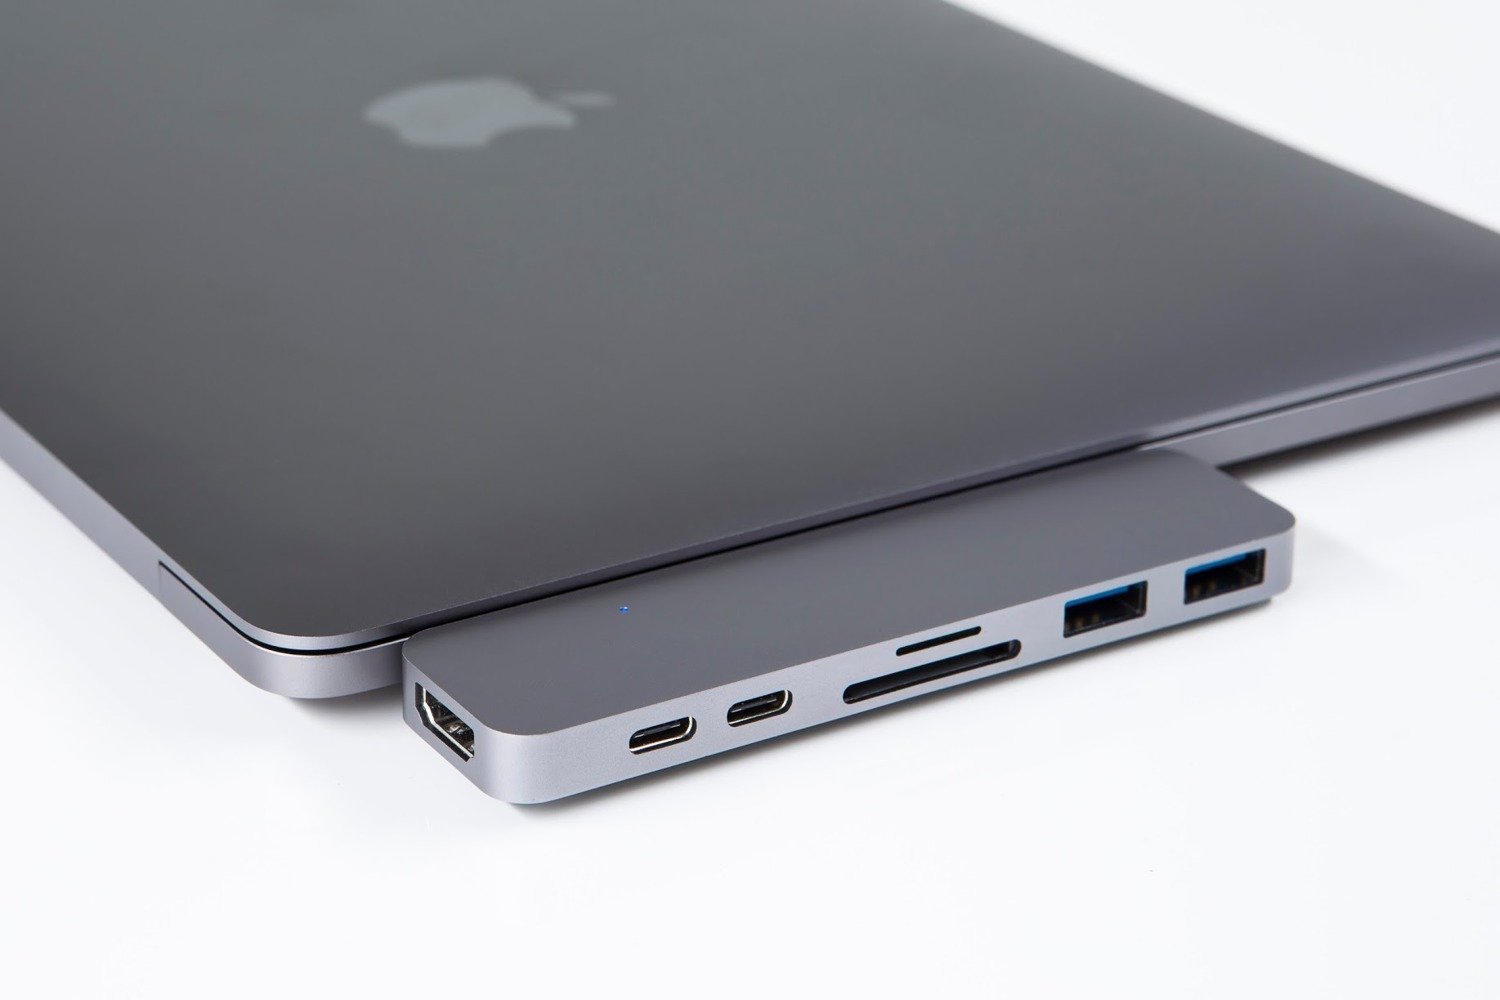 apple usb hub for macbook pro 2016